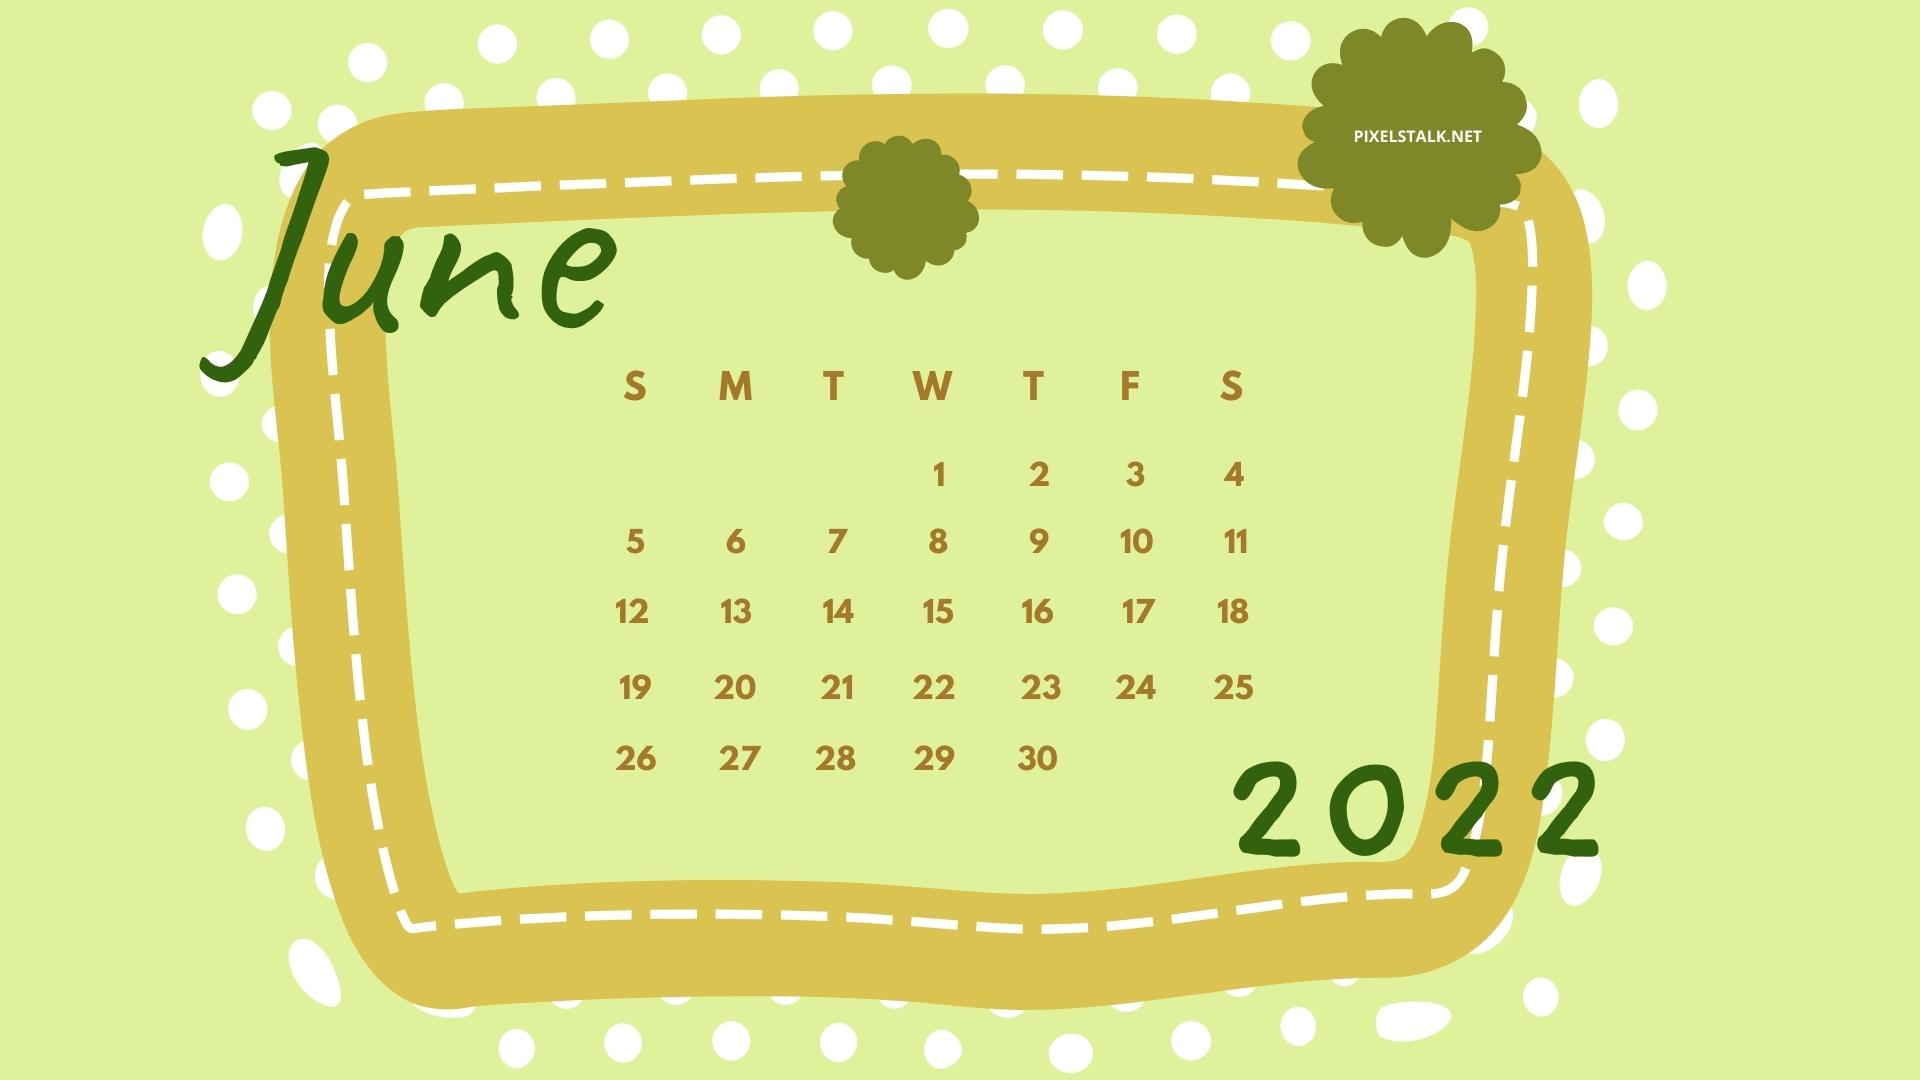 June 2022 Calendar Backgrounds HD Free download